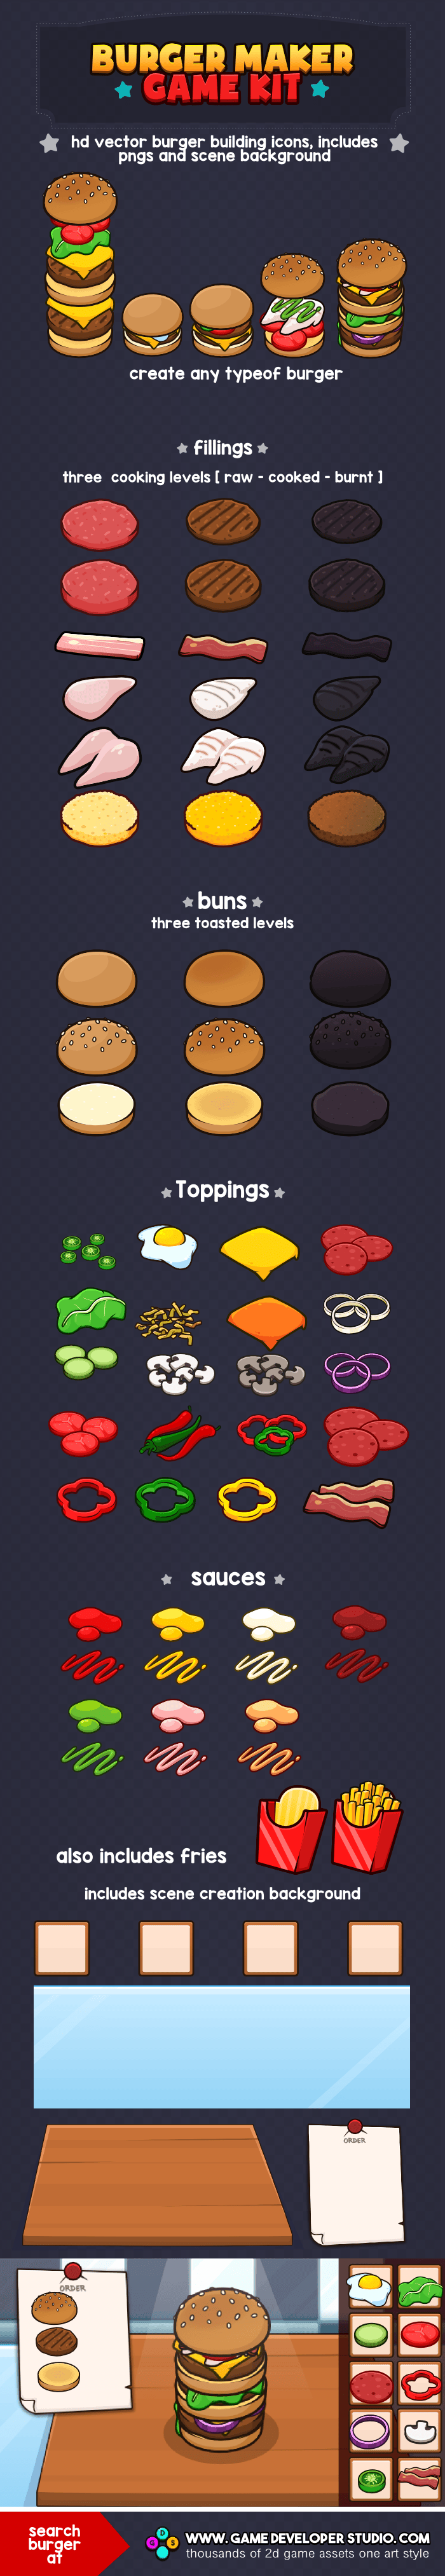 Burger maker game kit